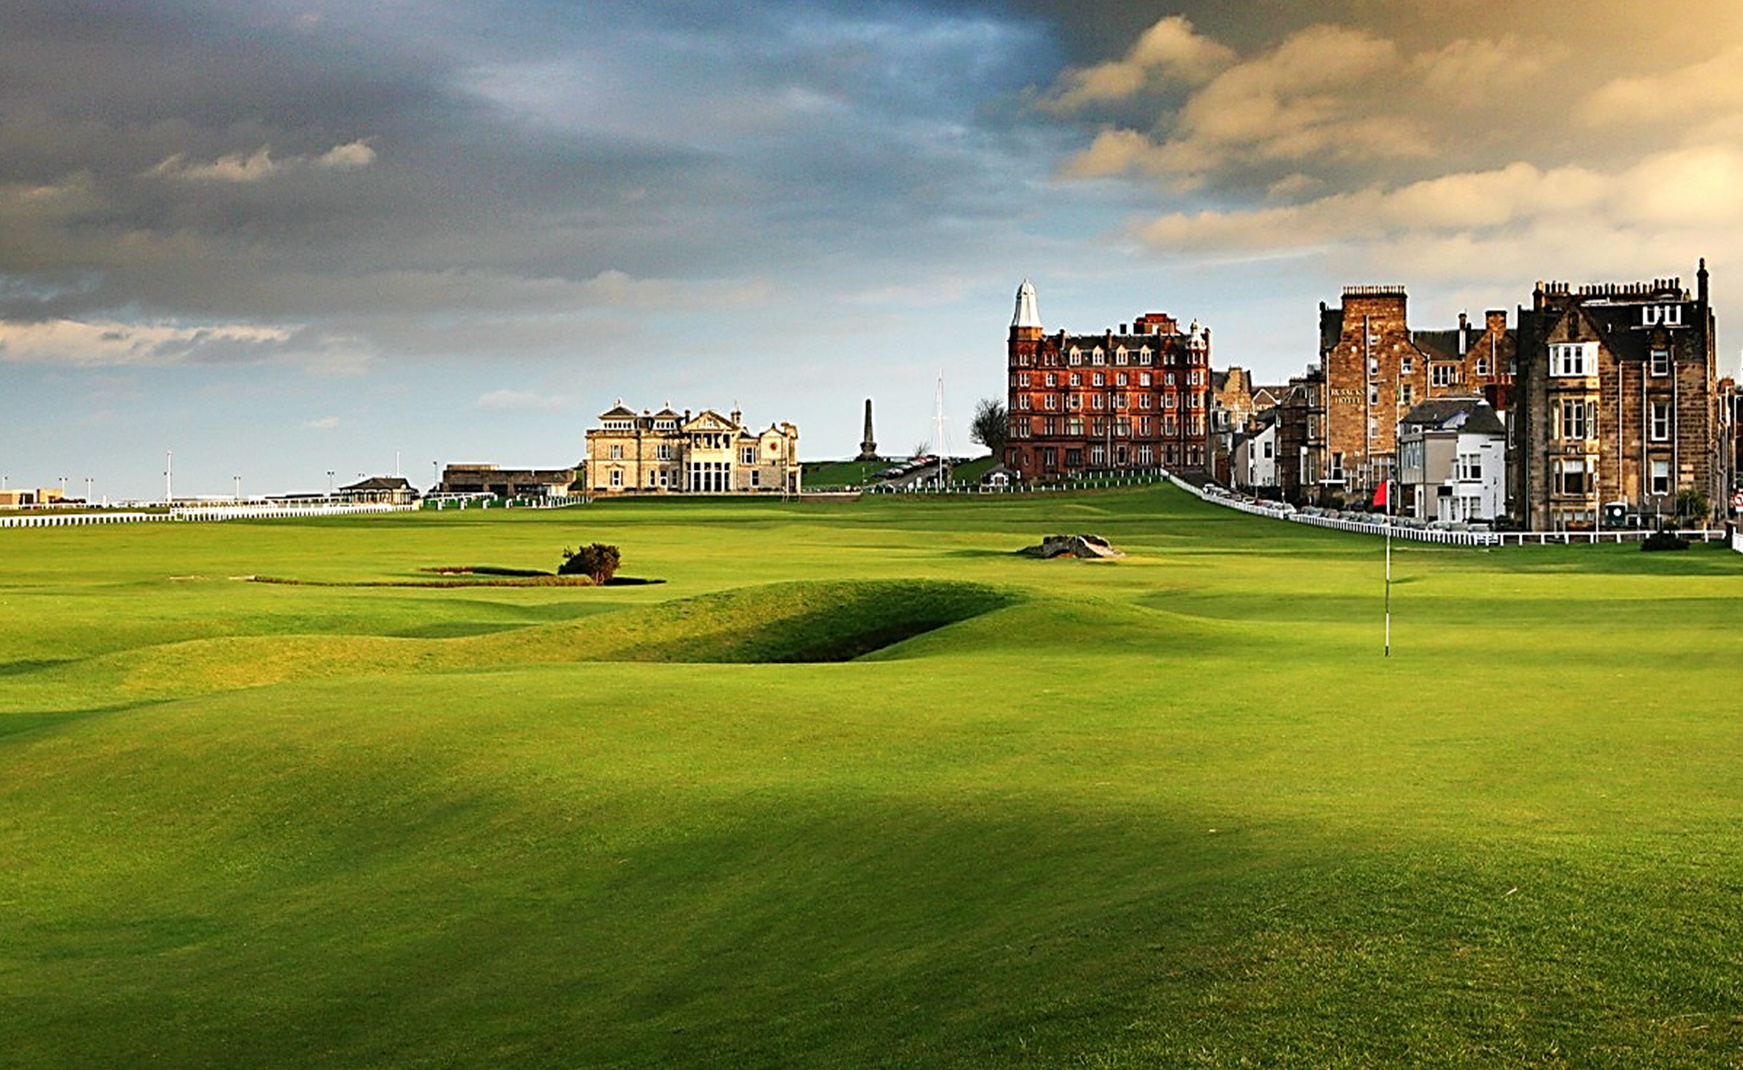 best golf tour scotland